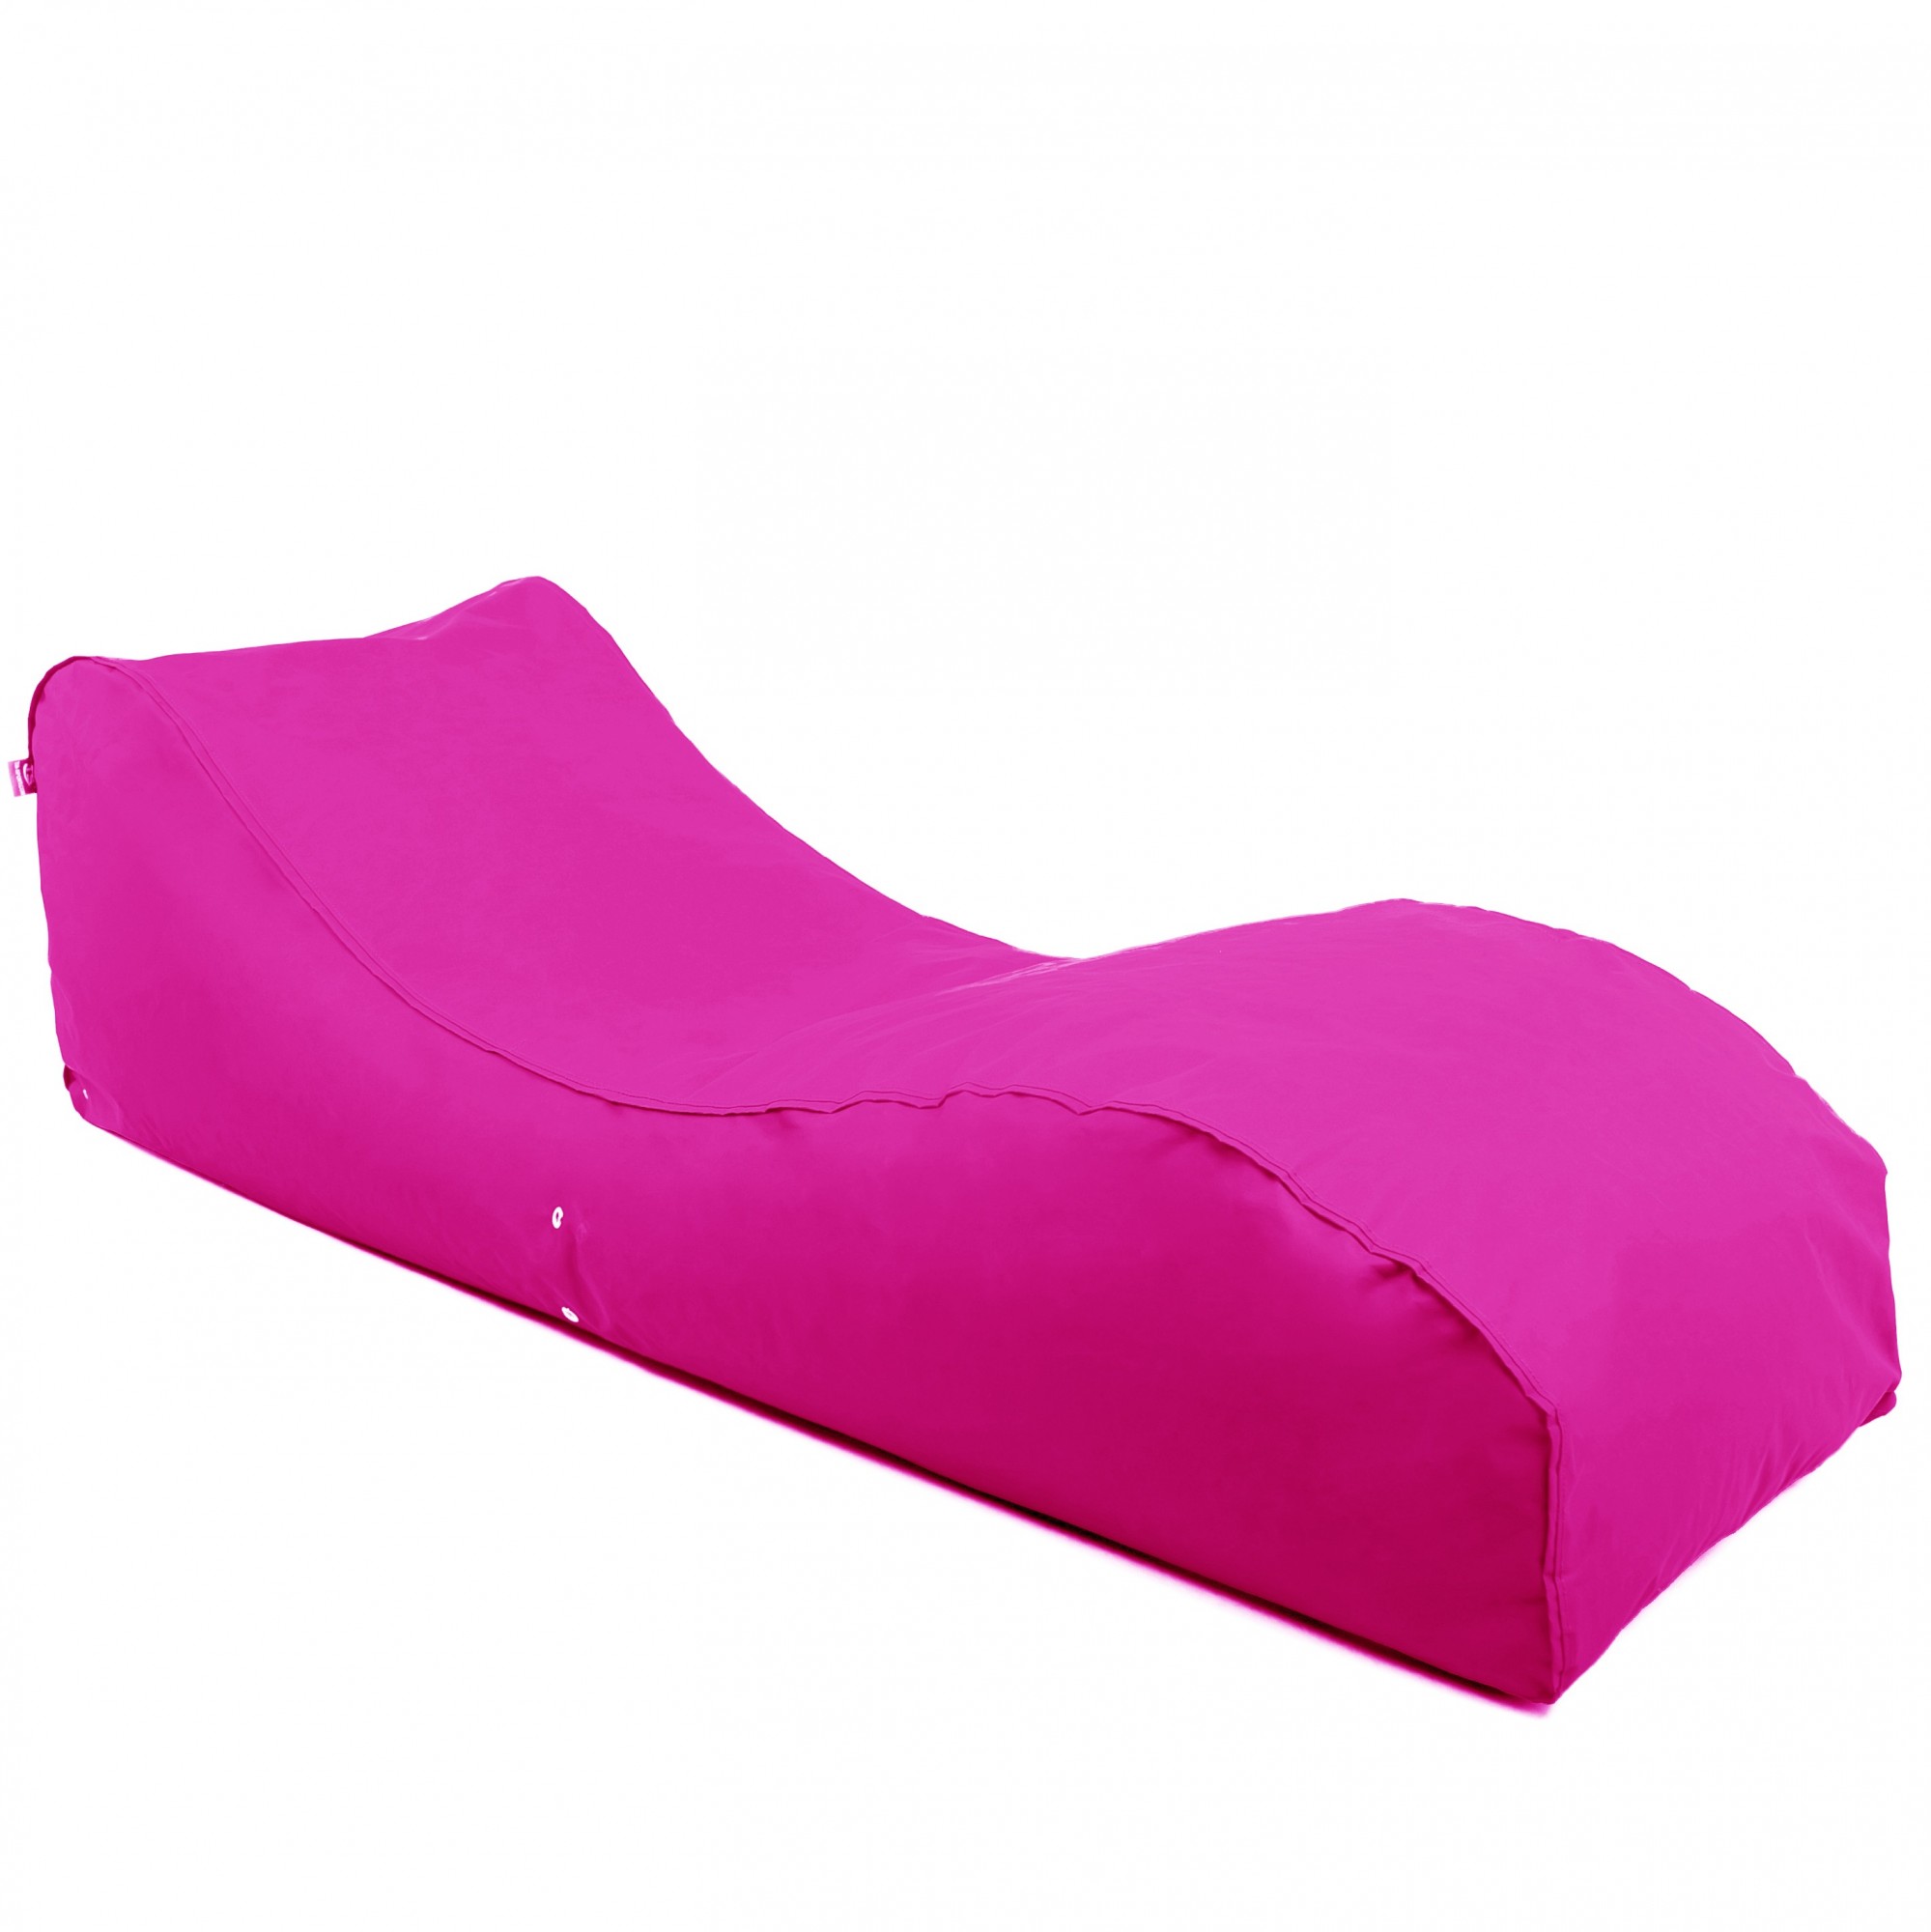 Бескаркасный лежак Tia-Sport Лаундж 185х60х55 см розовый (sm-0673-2)